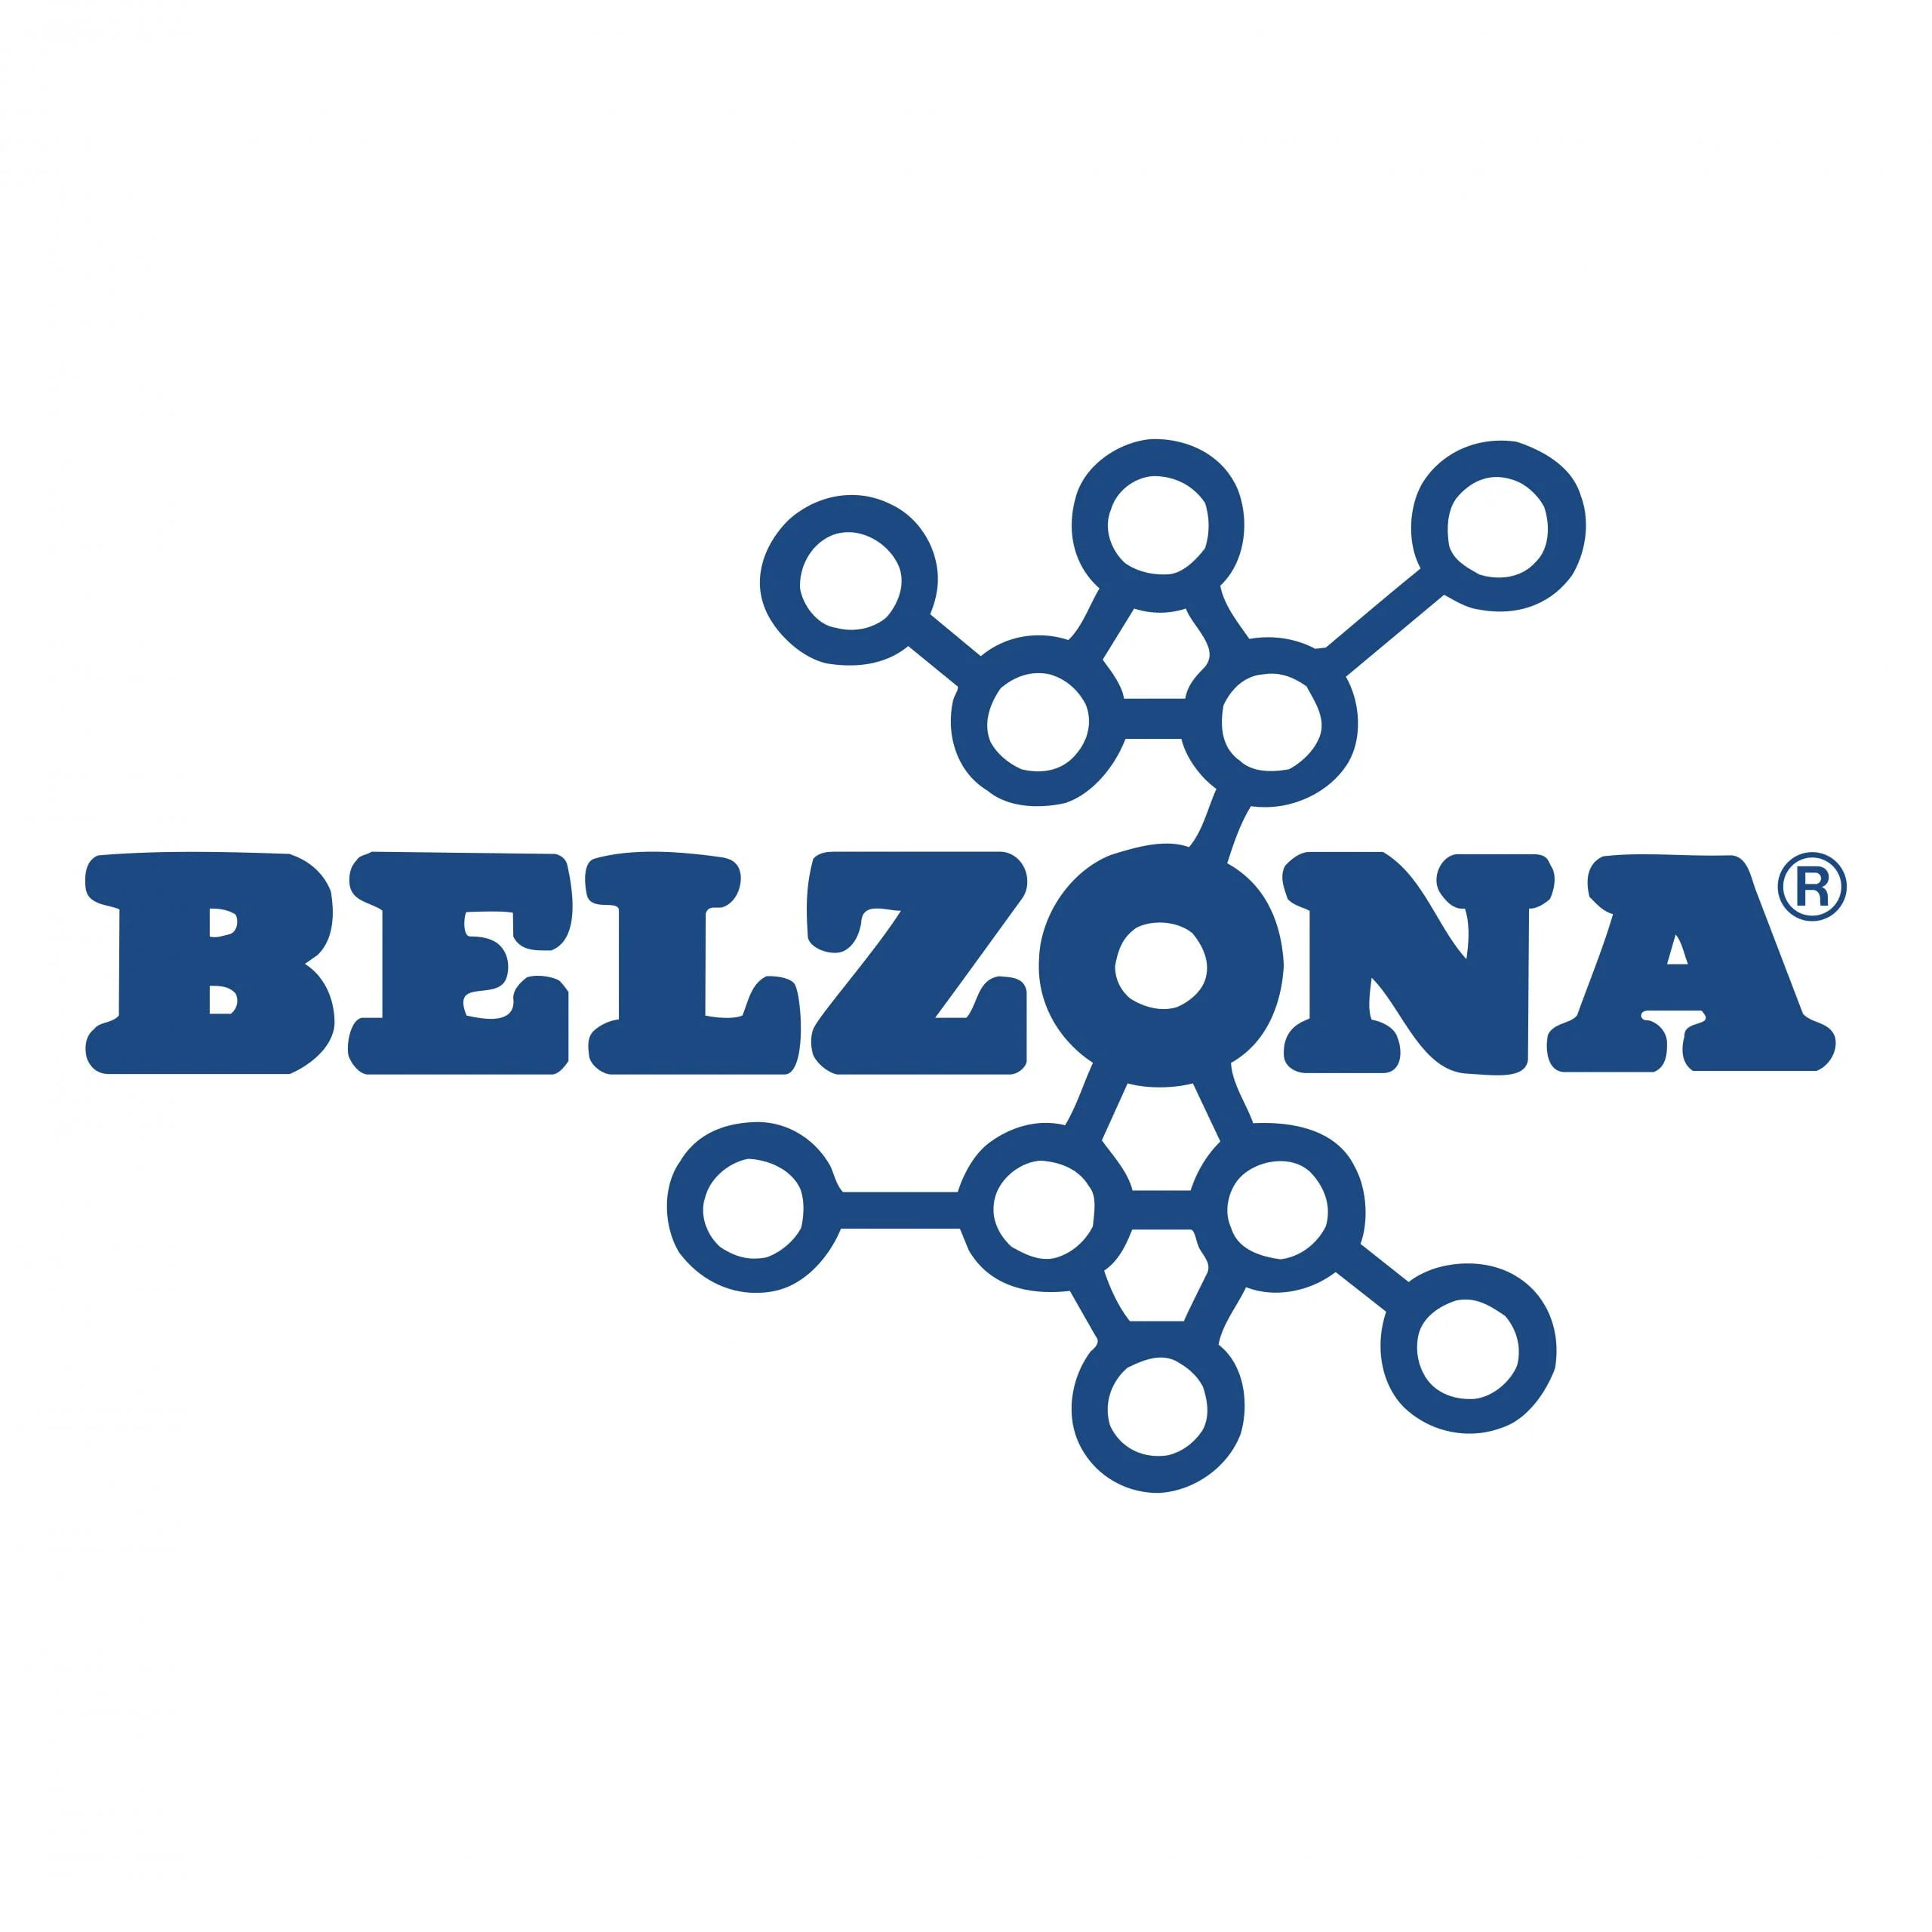 belzona-logo